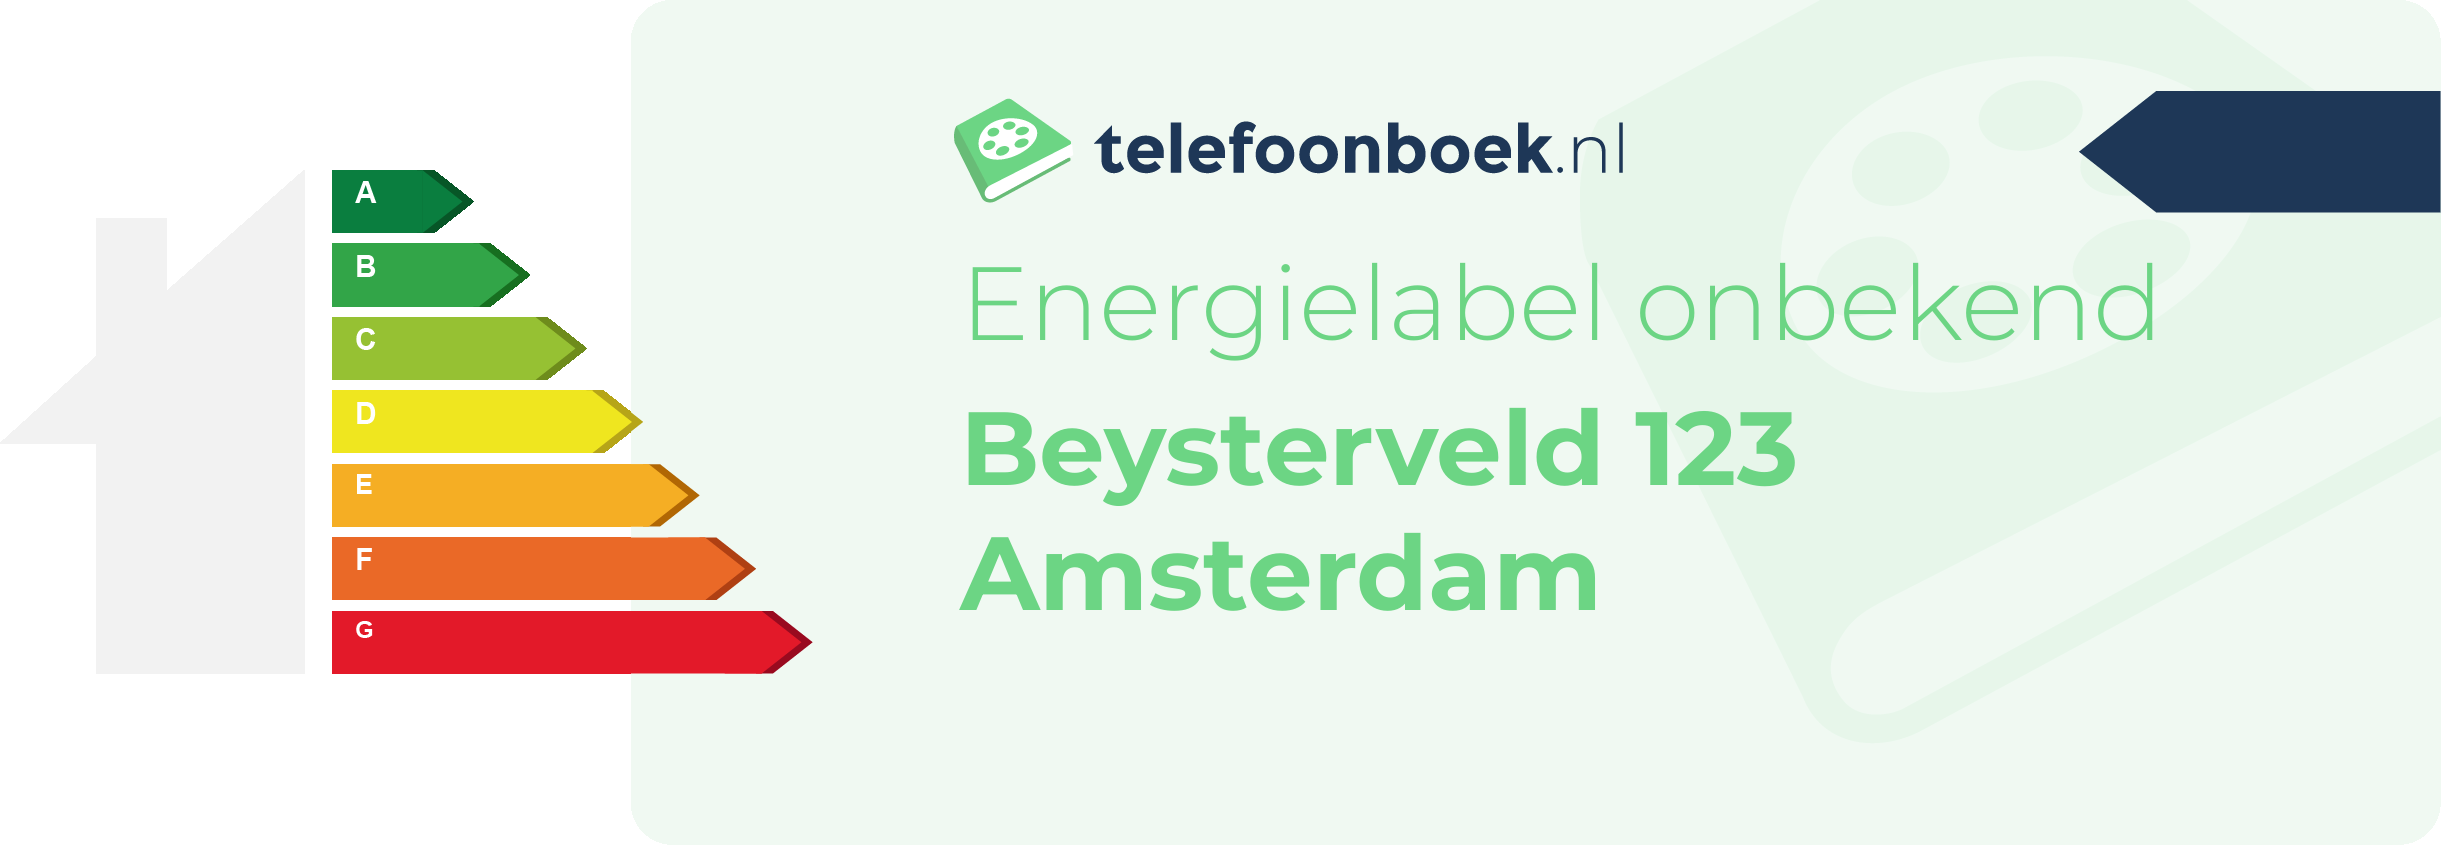 Energielabel Beysterveld 123 Amsterdam